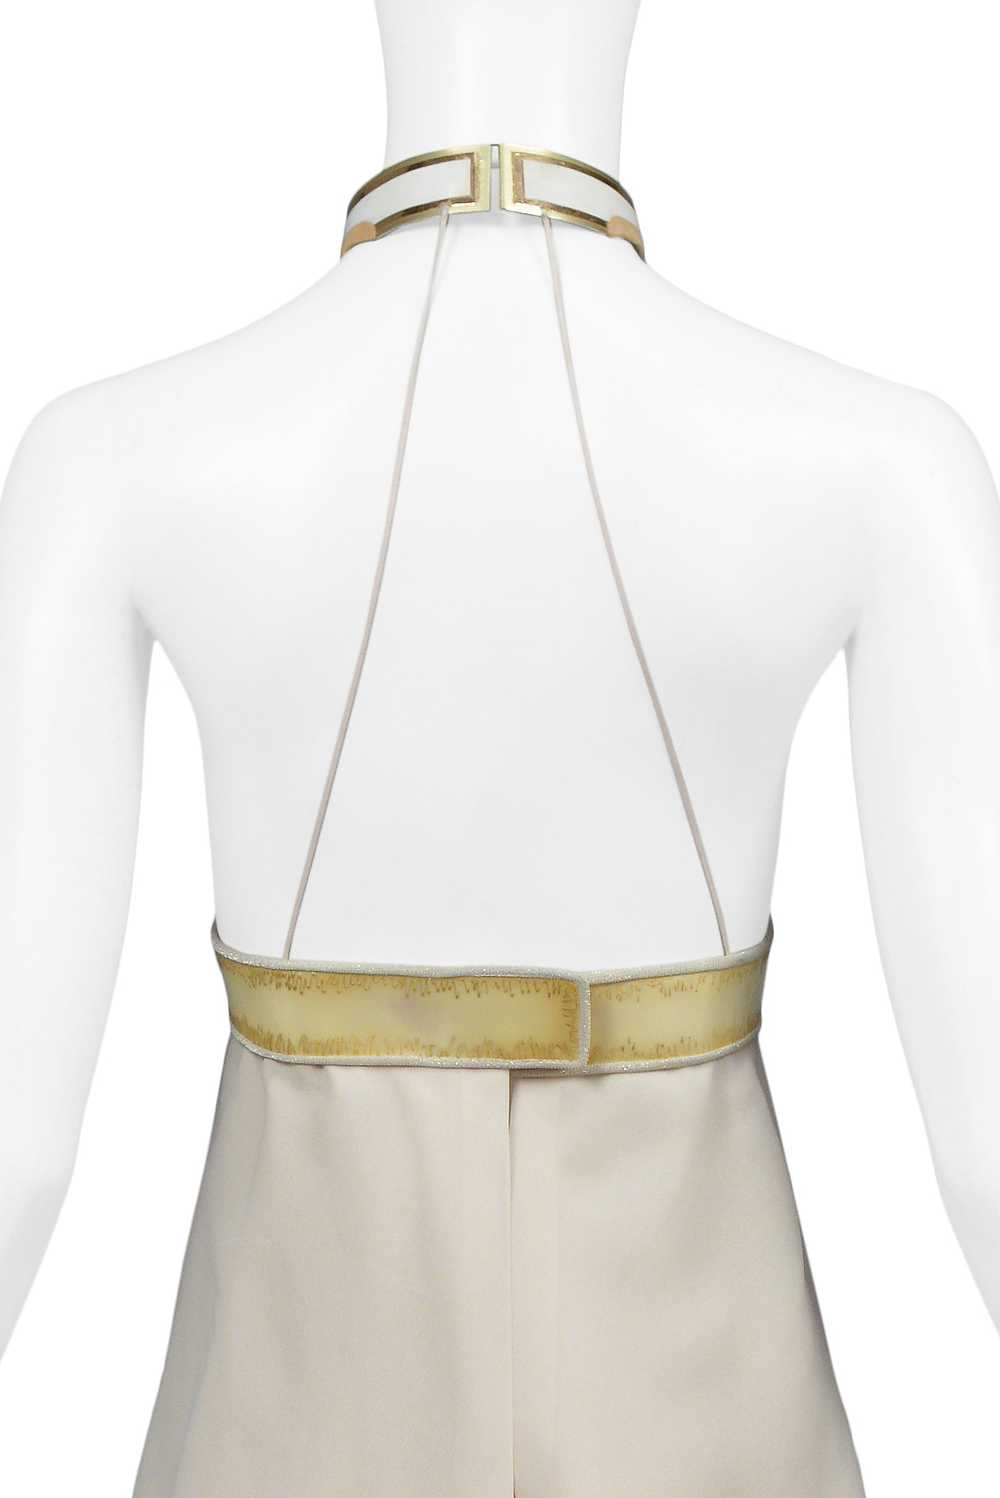 JACQUES CASSIA OFF WHITE VINYL COLLAR DRESS - image 4